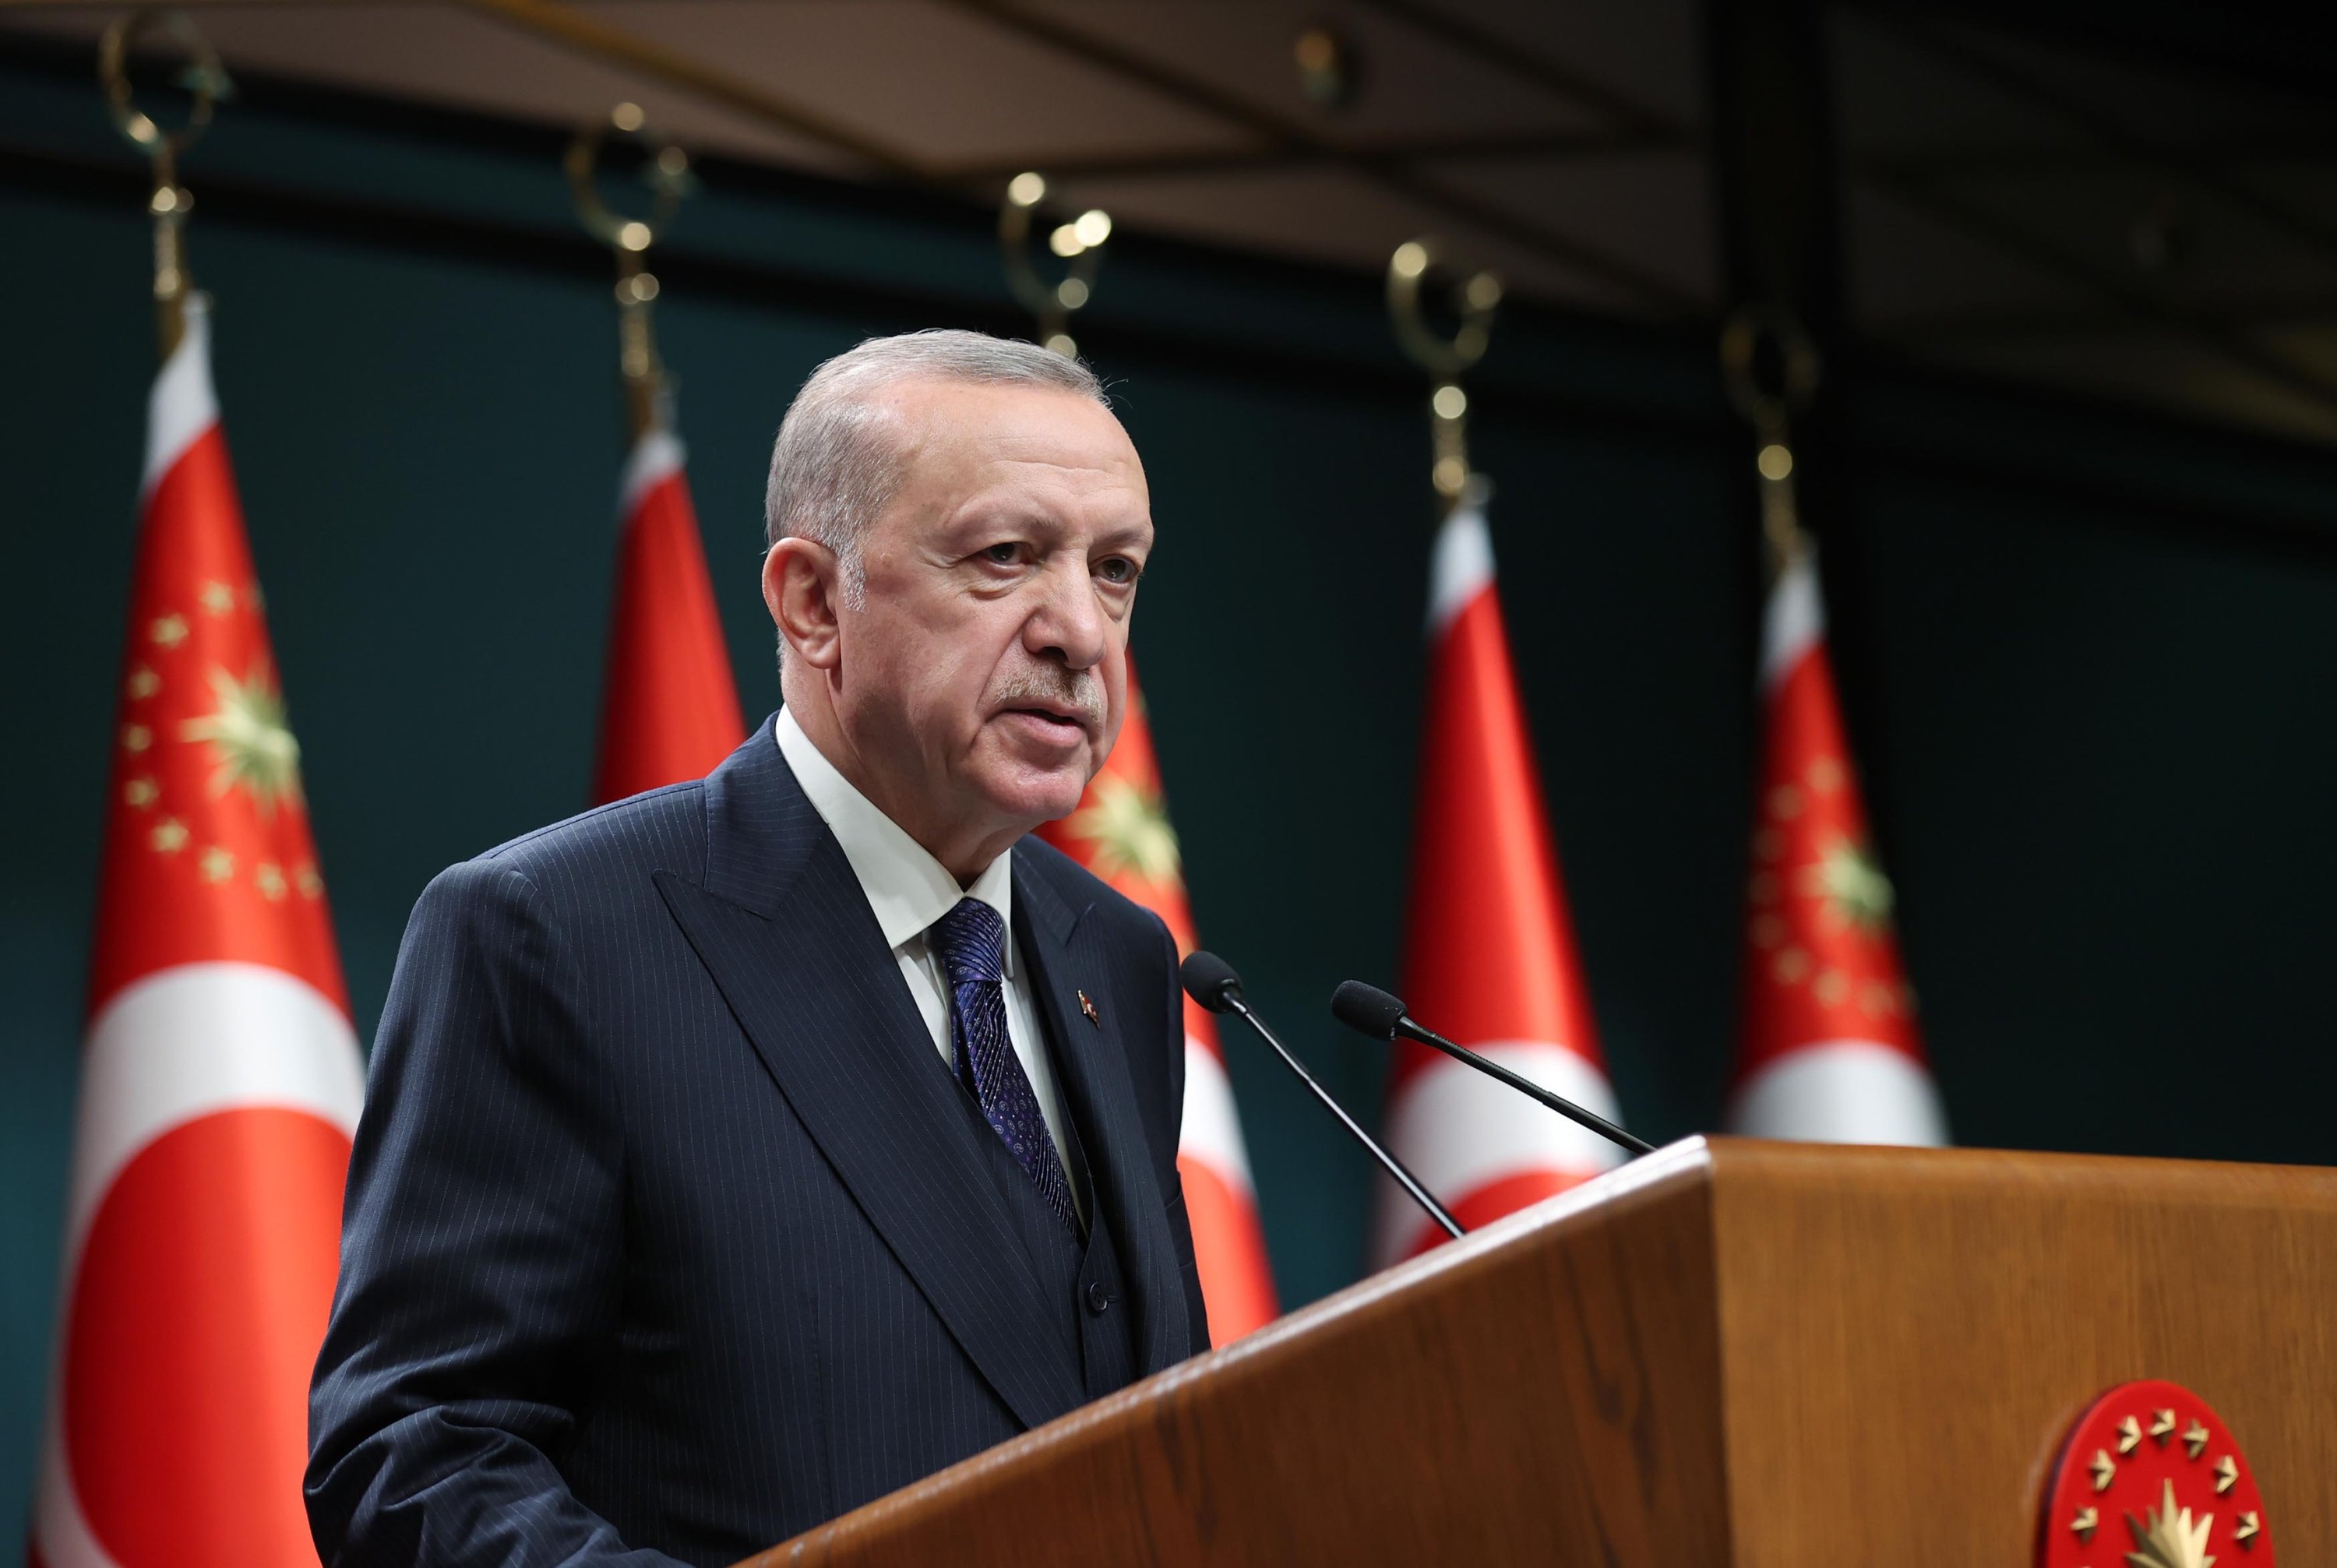 President Erdoğan speaks on stage, in Ankara, Turkey, Nov. 22, 2021. (AA Photo)